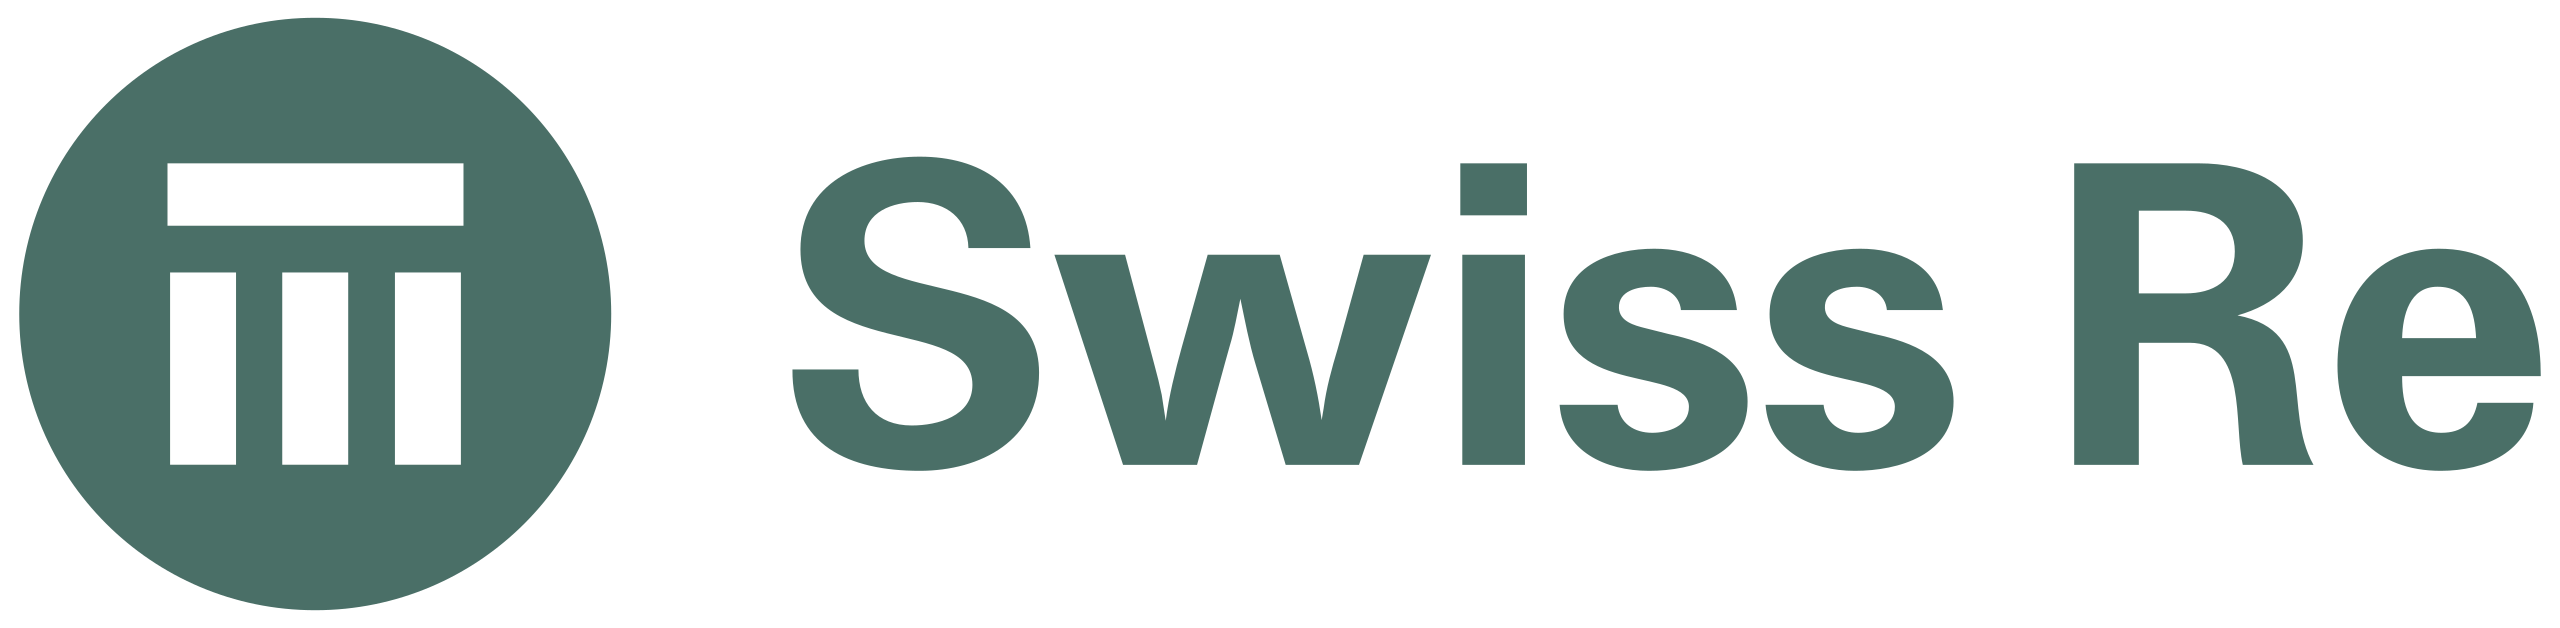 Swiss Re 2013 logo.svg